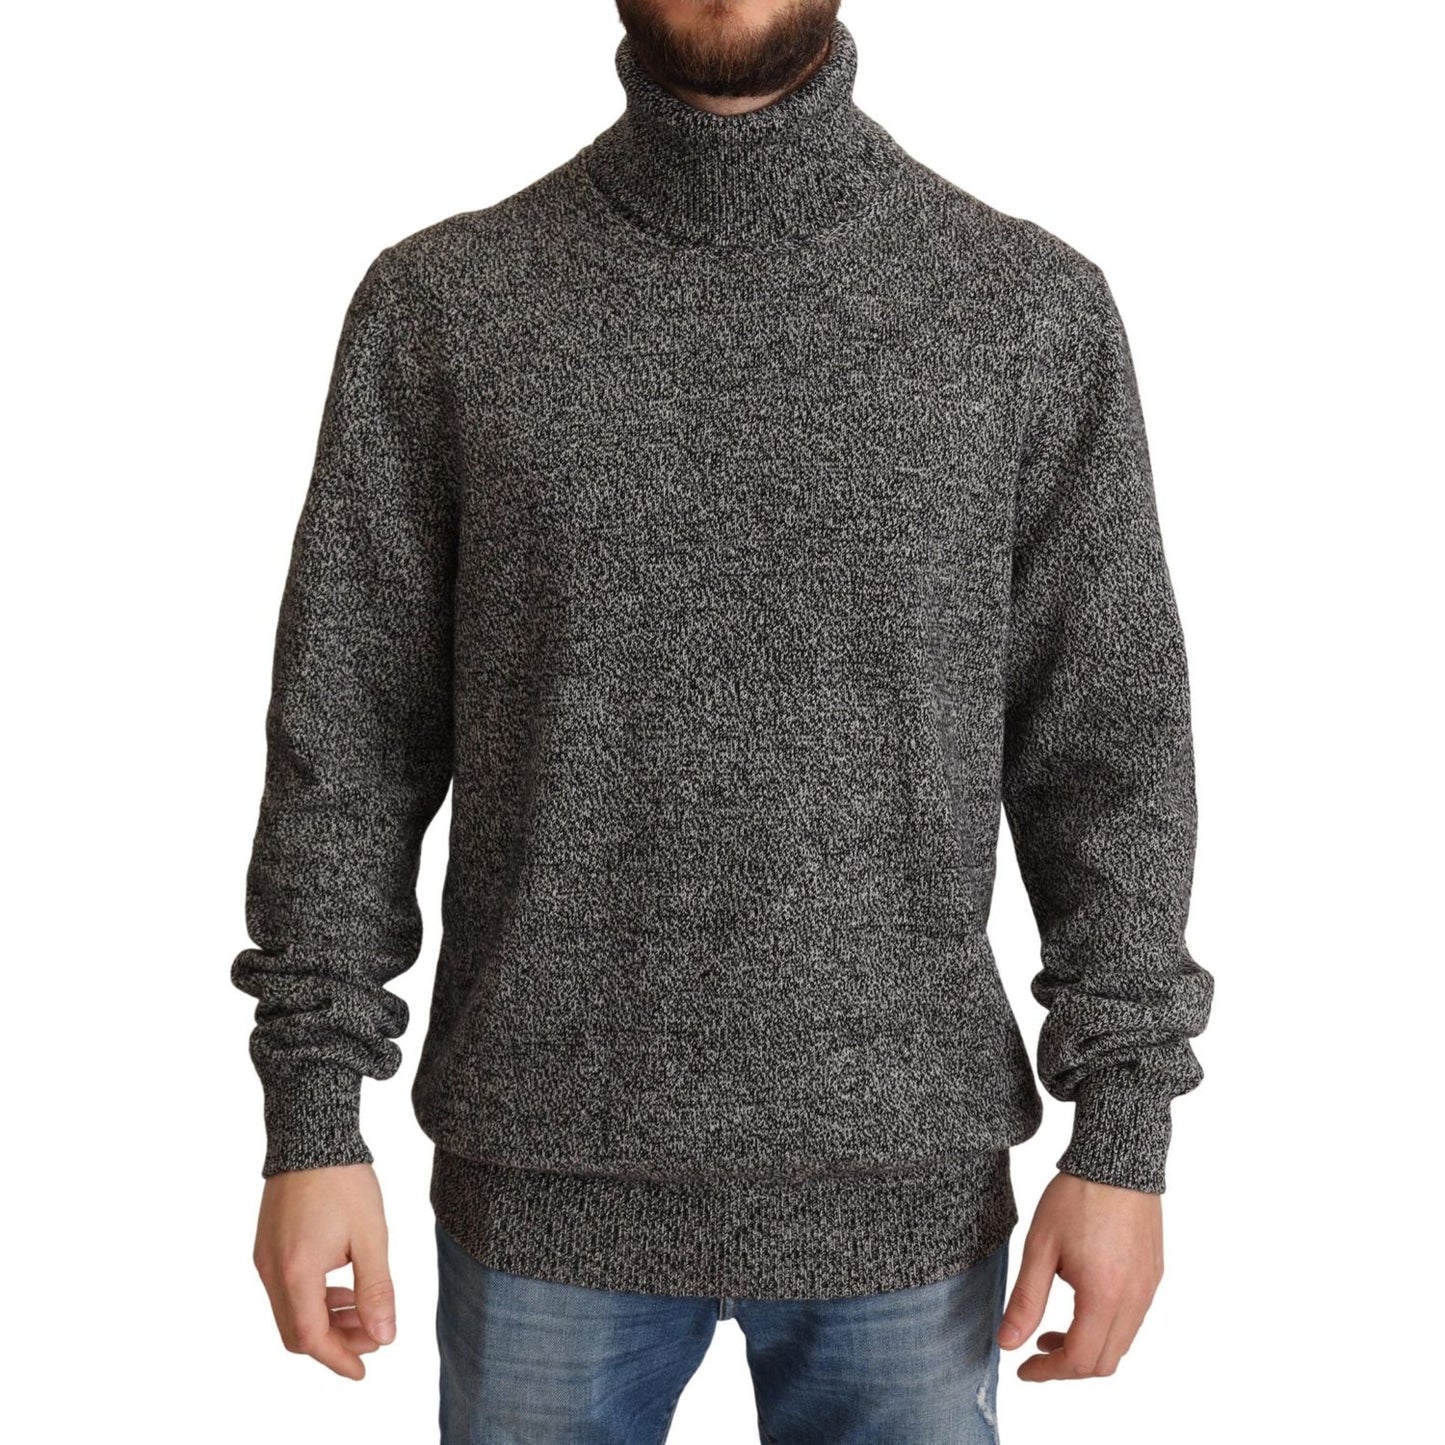 Dolce & Gabbana Gray Turtle Neck Cashmere Pullover Sweater gray-turtle-neck-cashmere-pullover-sweater MAN SWEATERS IMG_0168-scaled-50e887d9-f1b.jpg